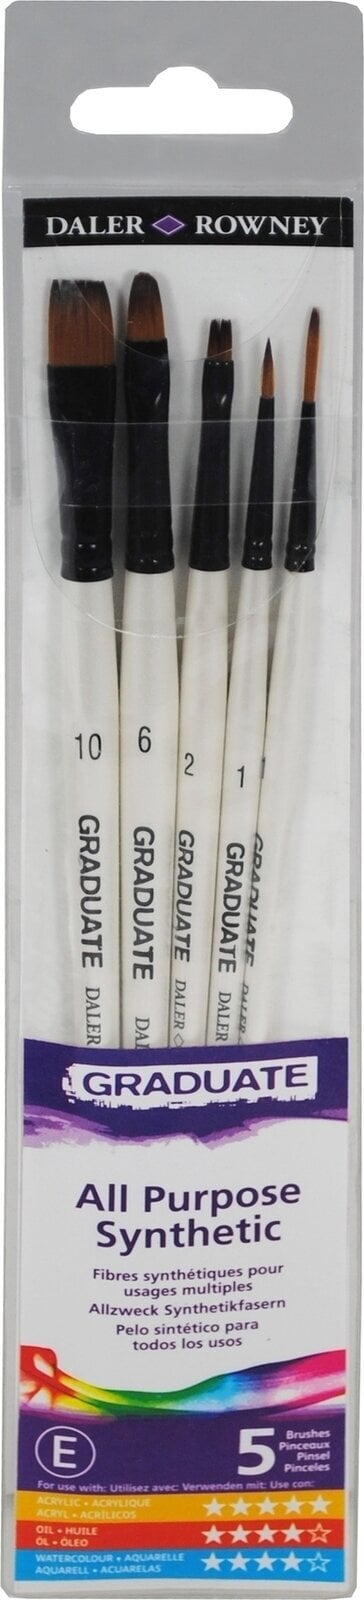 Cepillo de pintura Daler Rowney Graduate Multi-Technique Brush Synthetic Juego de pinceles 1 pc